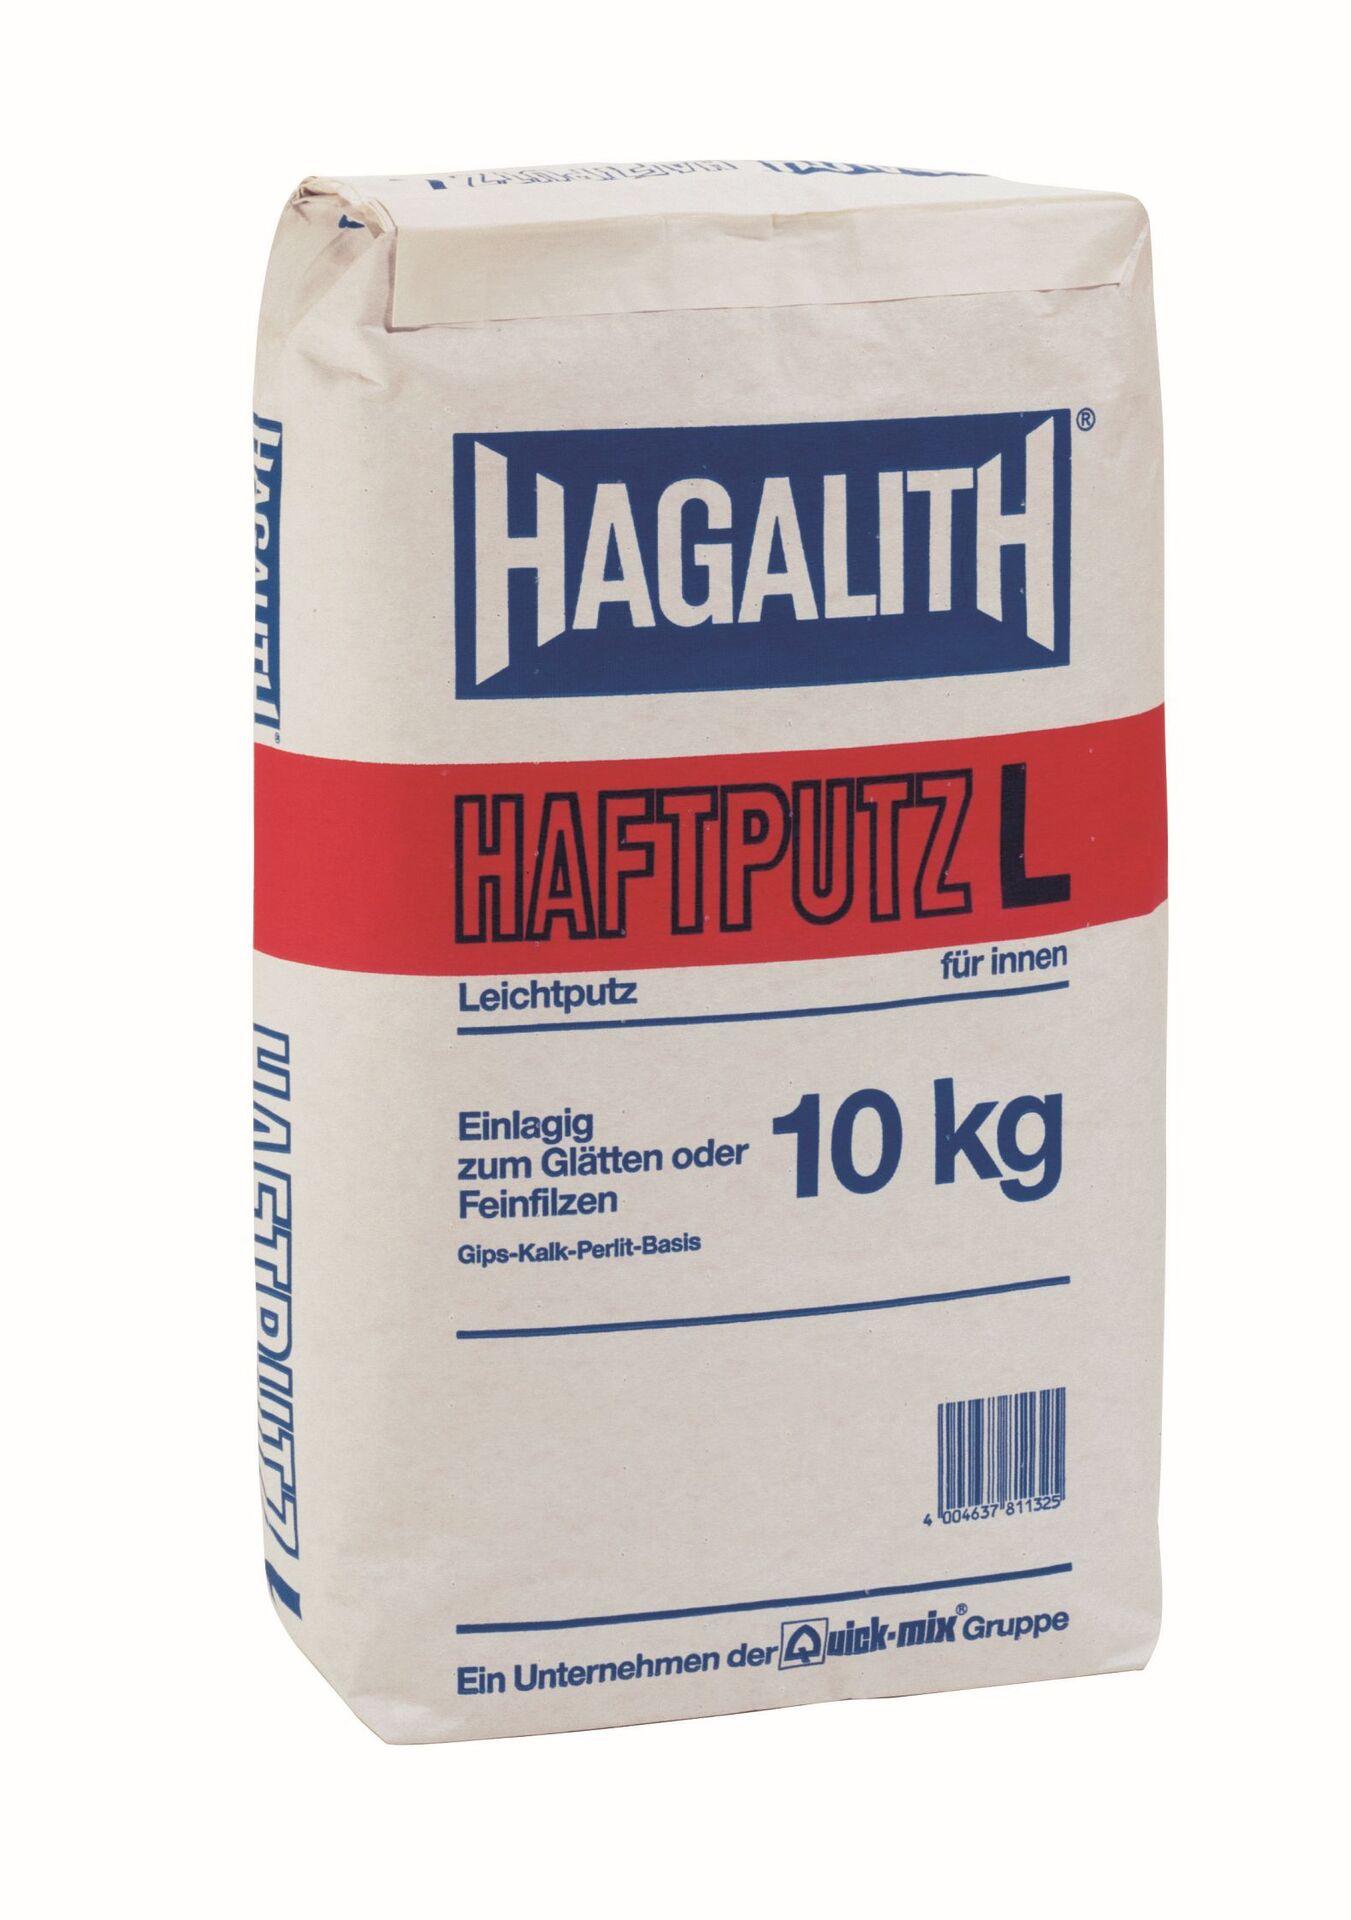 Hagalith-Haftputz L